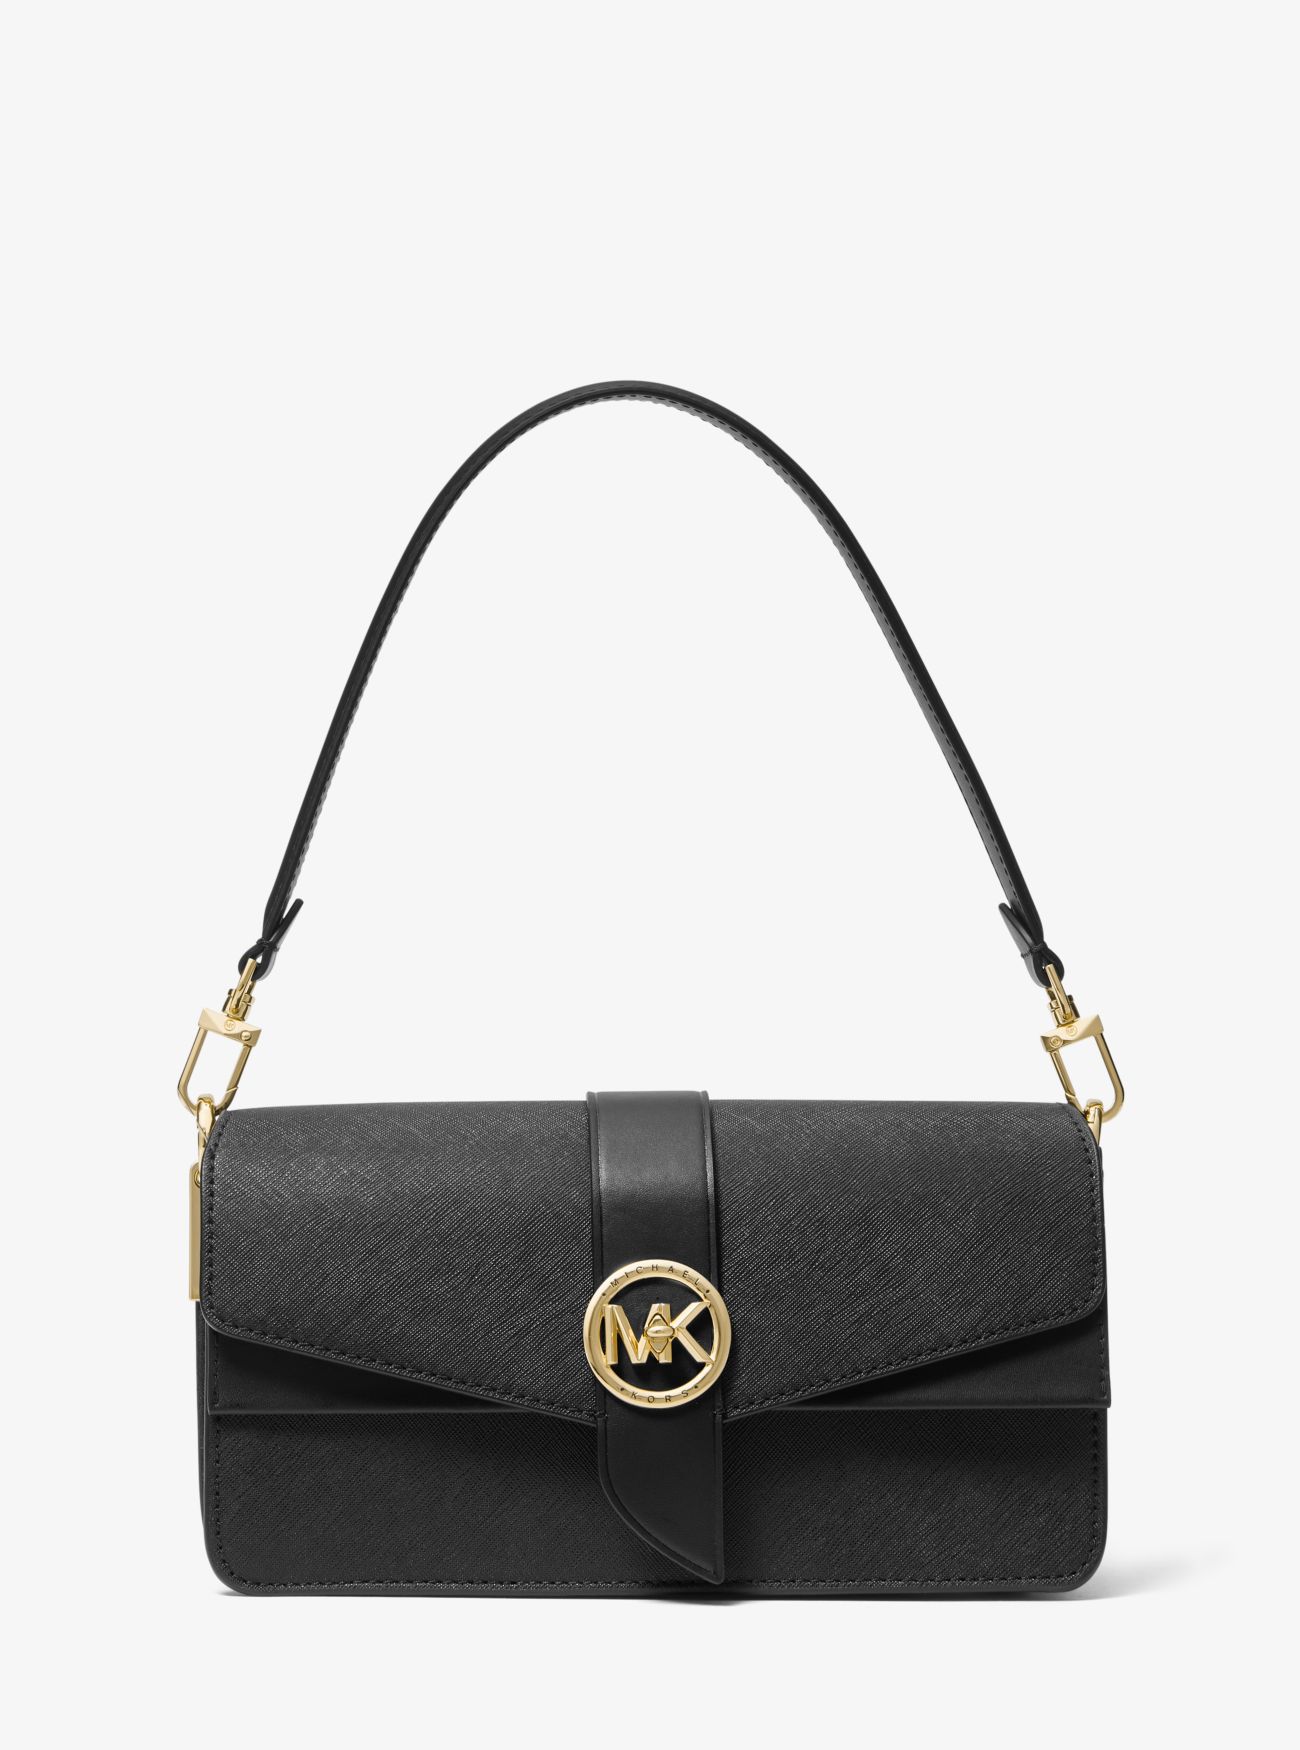 MK Greenwich Medium Saffiano Leather Shoulder Bag - Black - Michael Kors